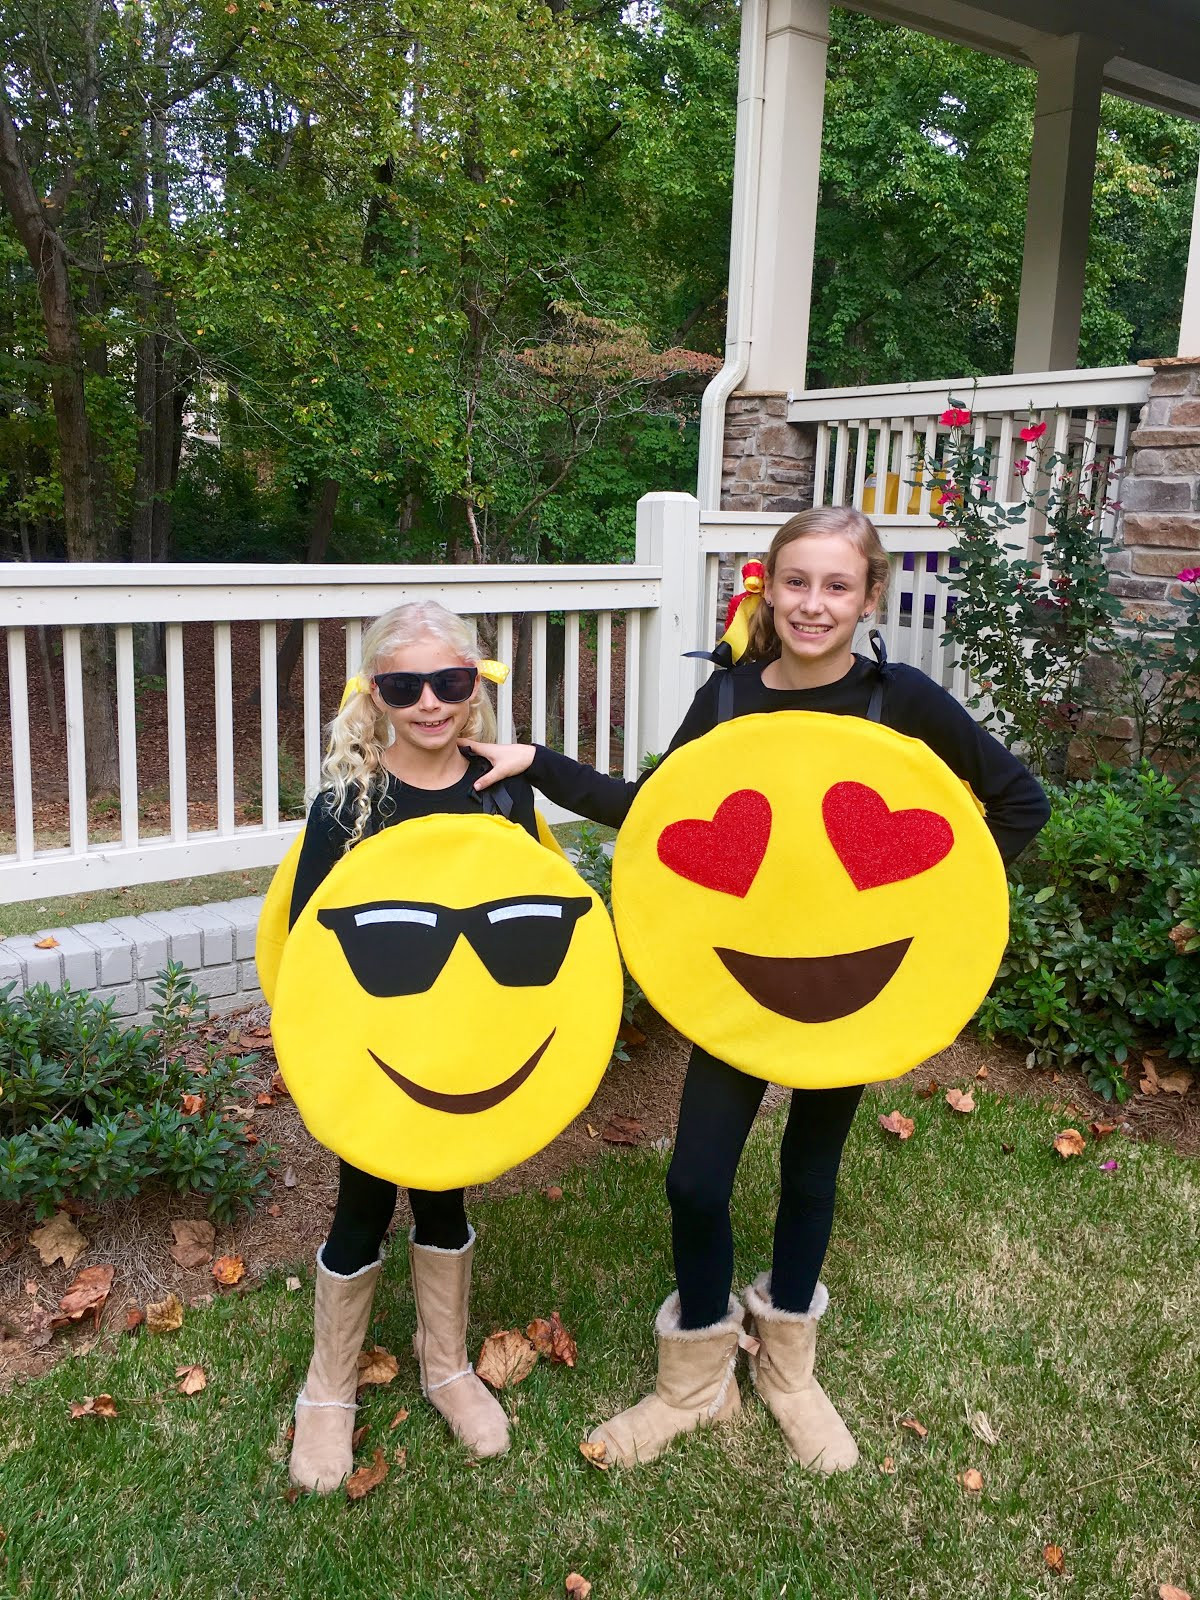 Best ideas about Emoji Costumes DIY
. Save or Pin Magnolia Mamas DIY Emoji Costume Now.